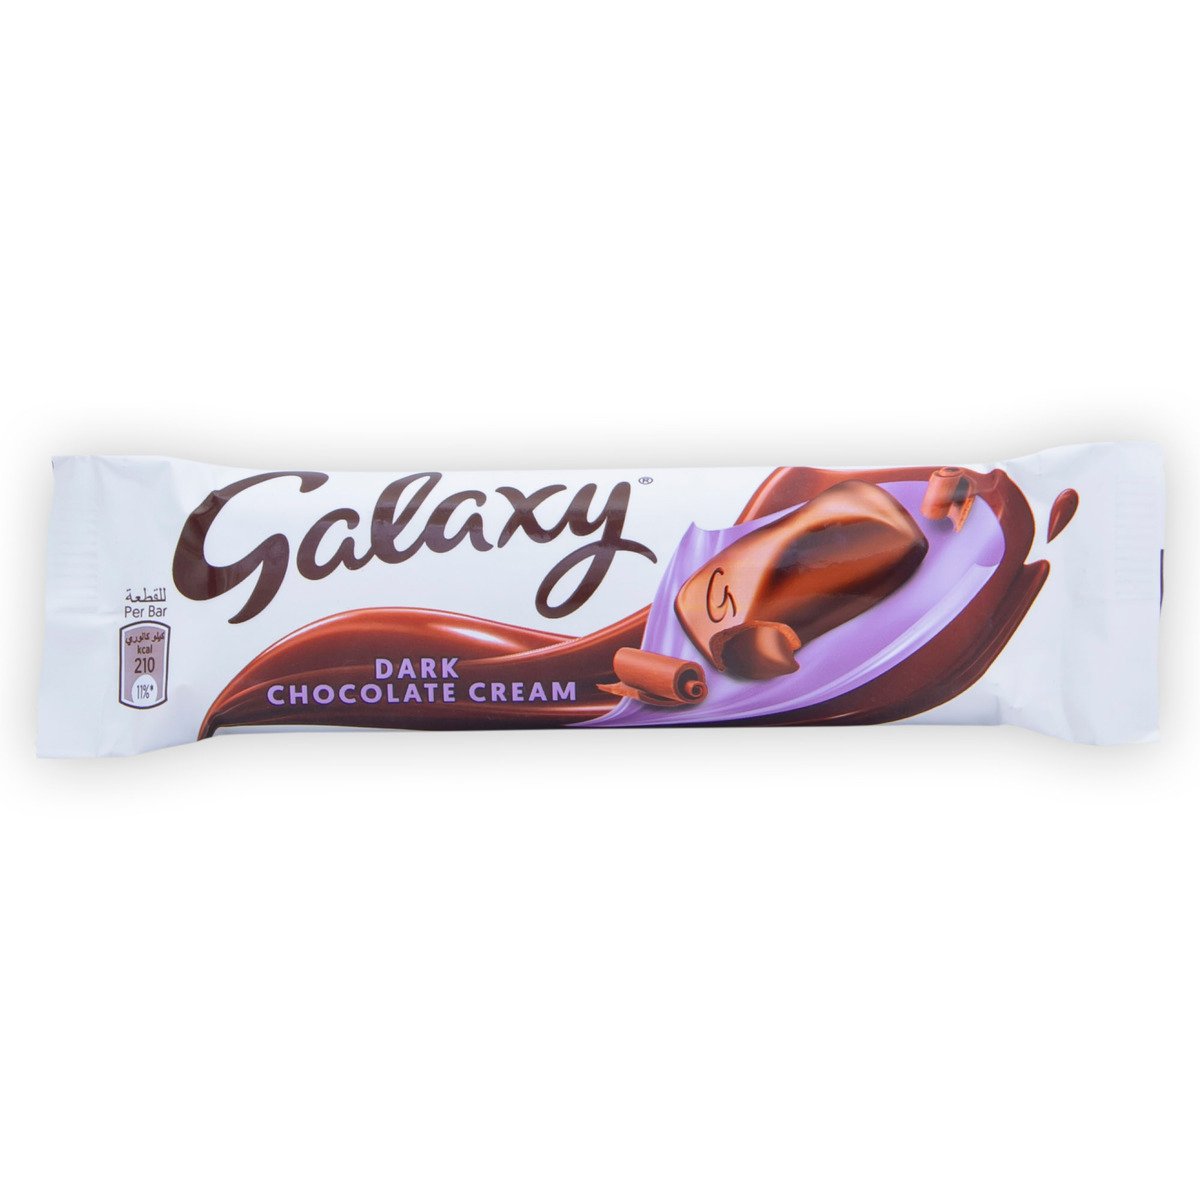 Galaxy Dark Chocolate Cream 38g